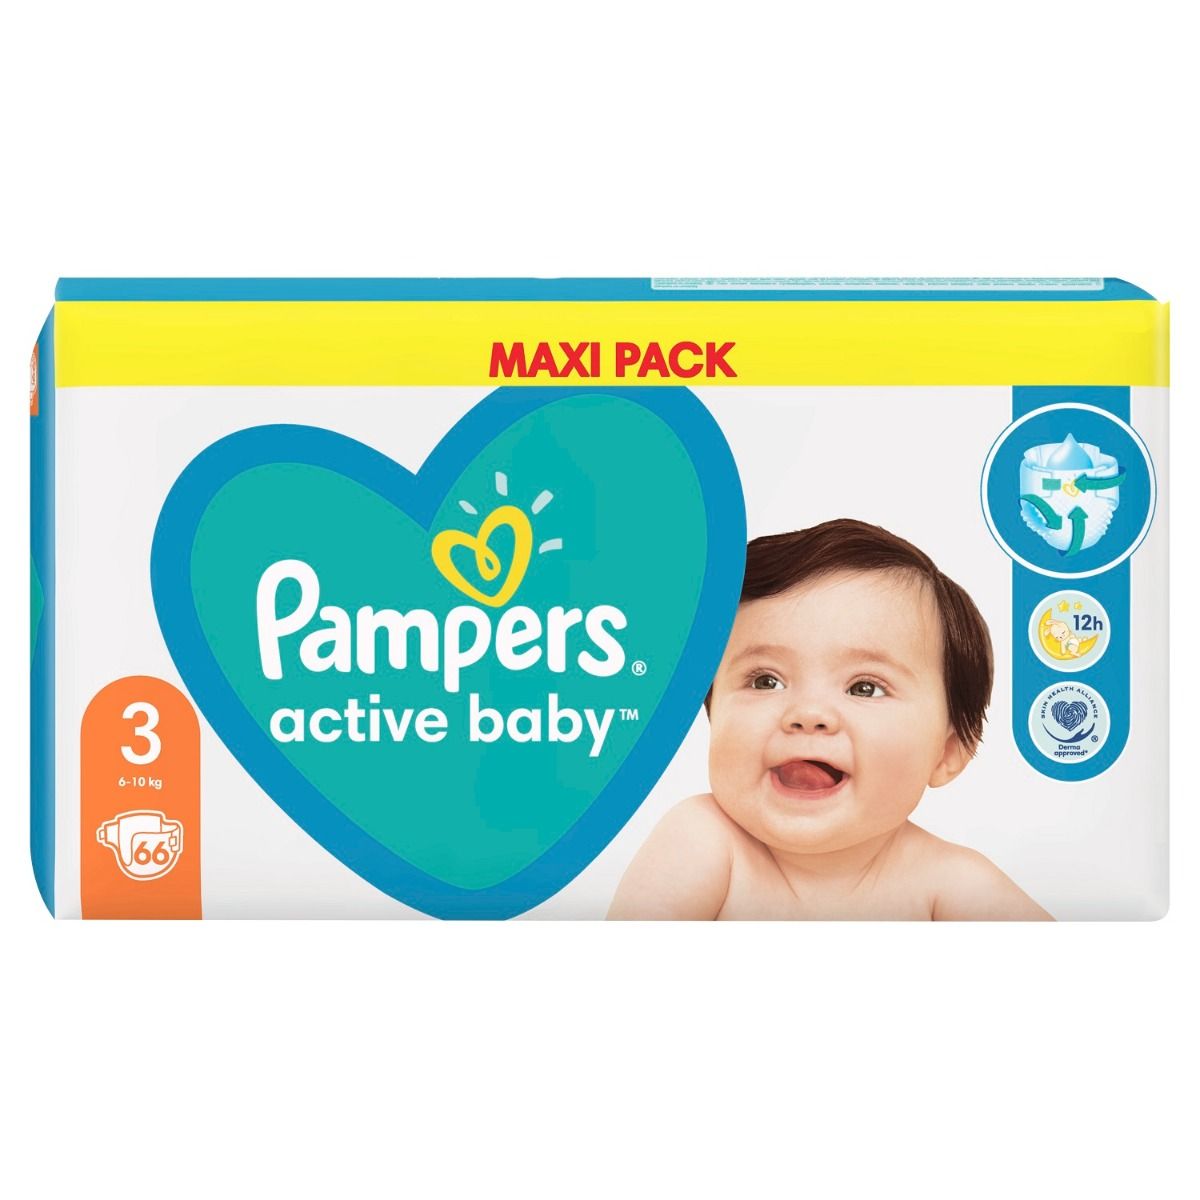 pampers active baby 3 wyglad 2017